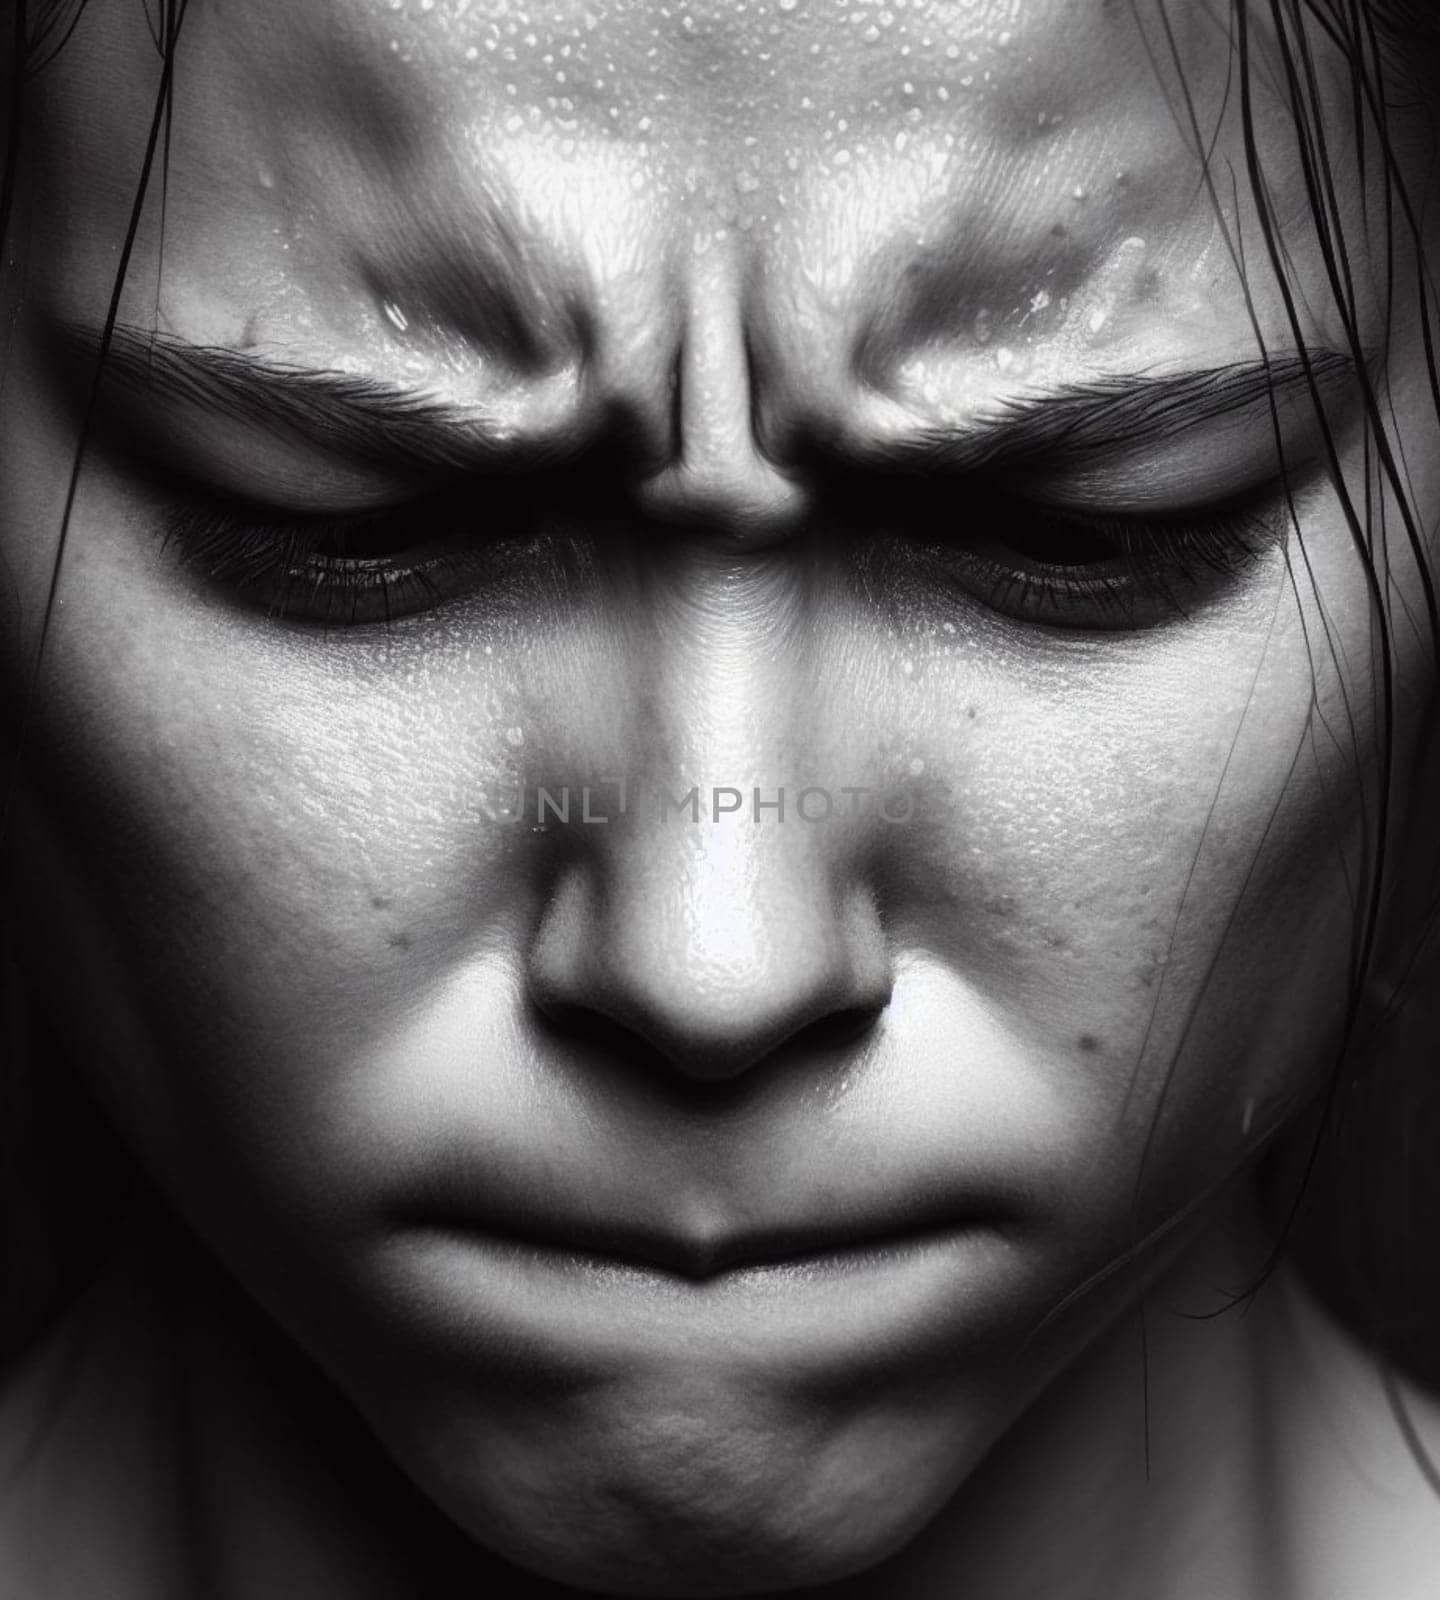 digital illustration unrecognizable human portrait depict deep emotion, distraught, mental illness by verbano